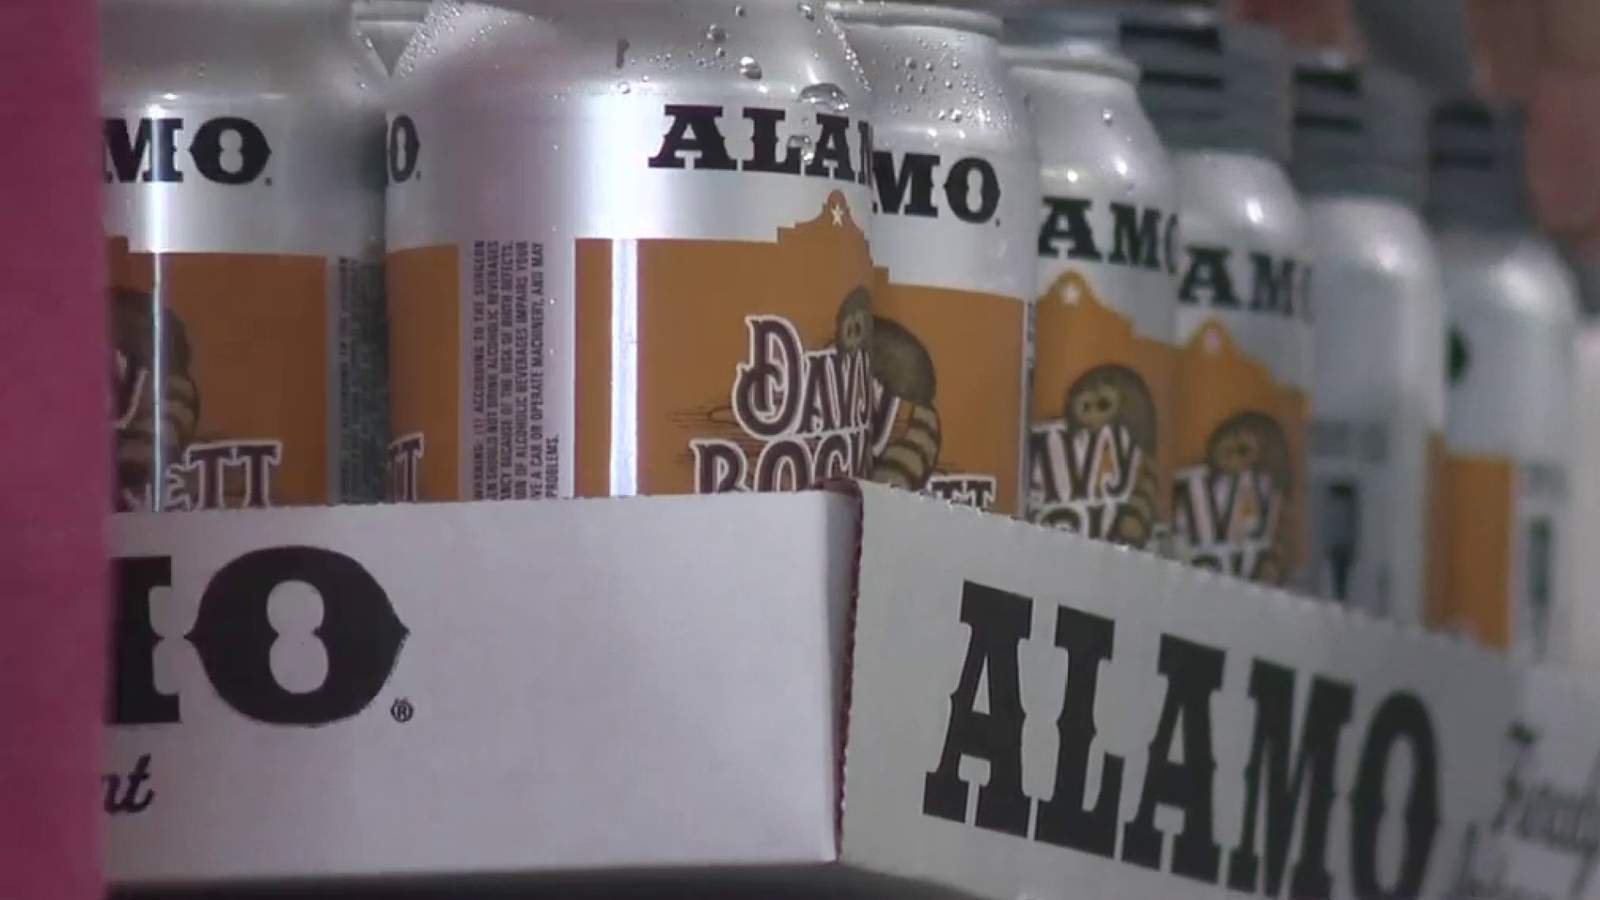 Aluminum can shortage impacting San Antonio brewery